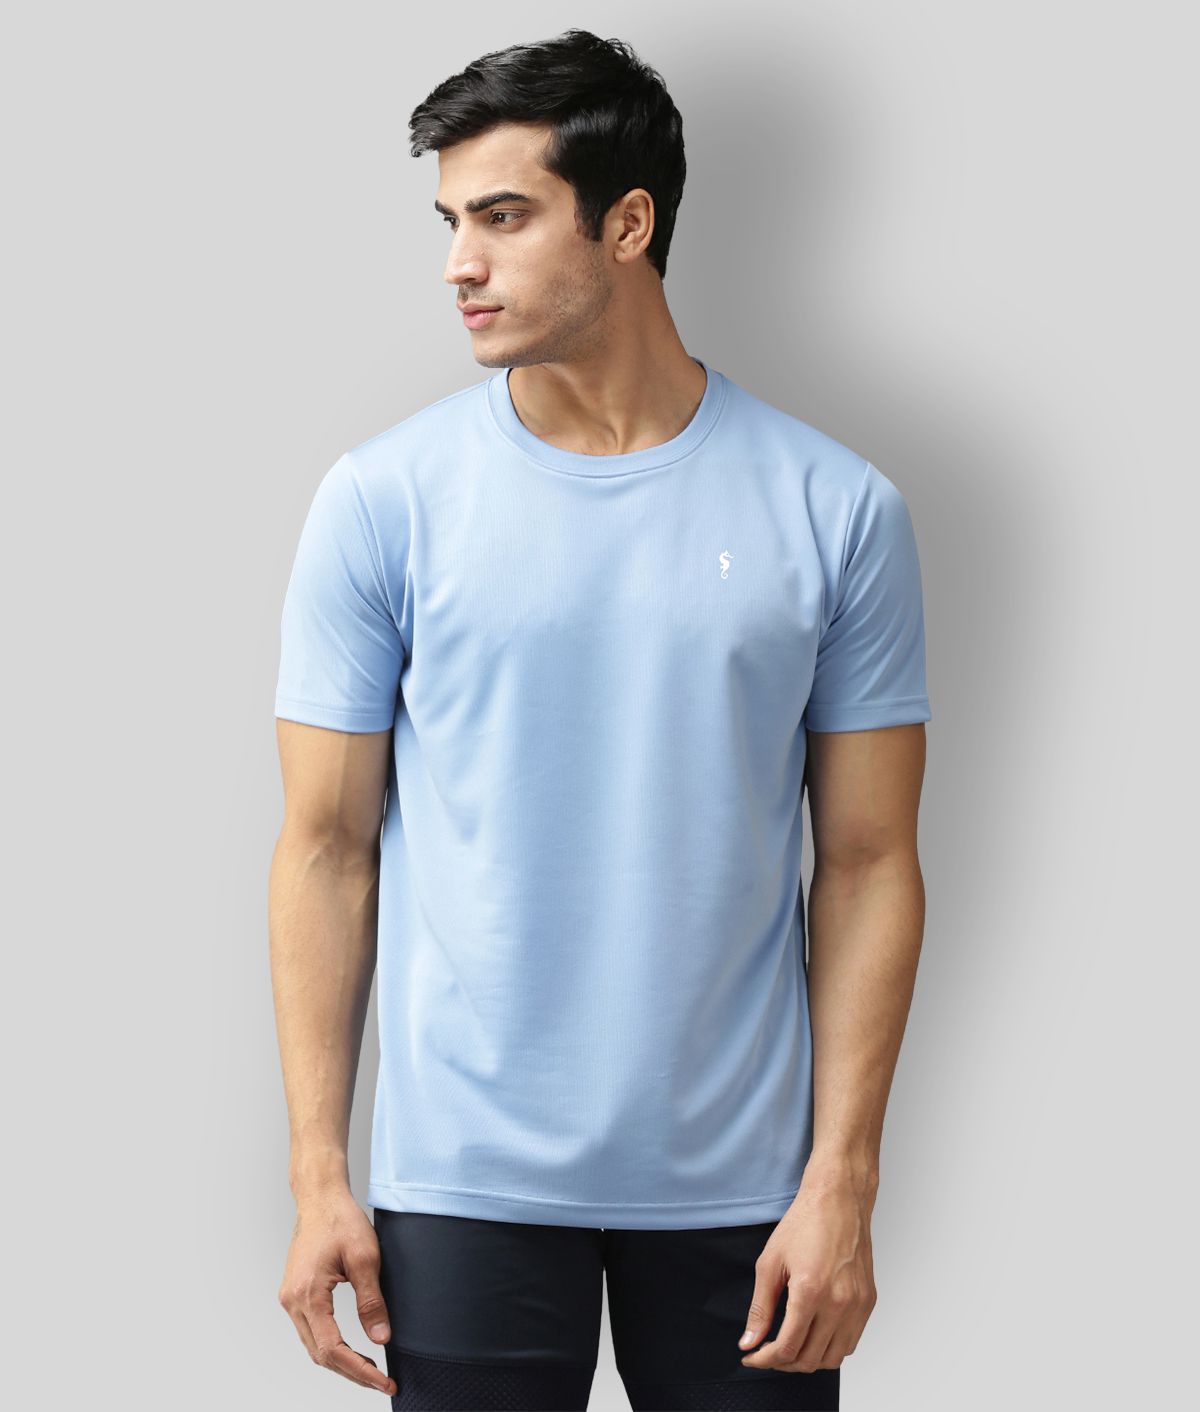 EPPE - Light Blue Polyester Regular Fit Men's Sports T-Shirt ( Pack of 1 )